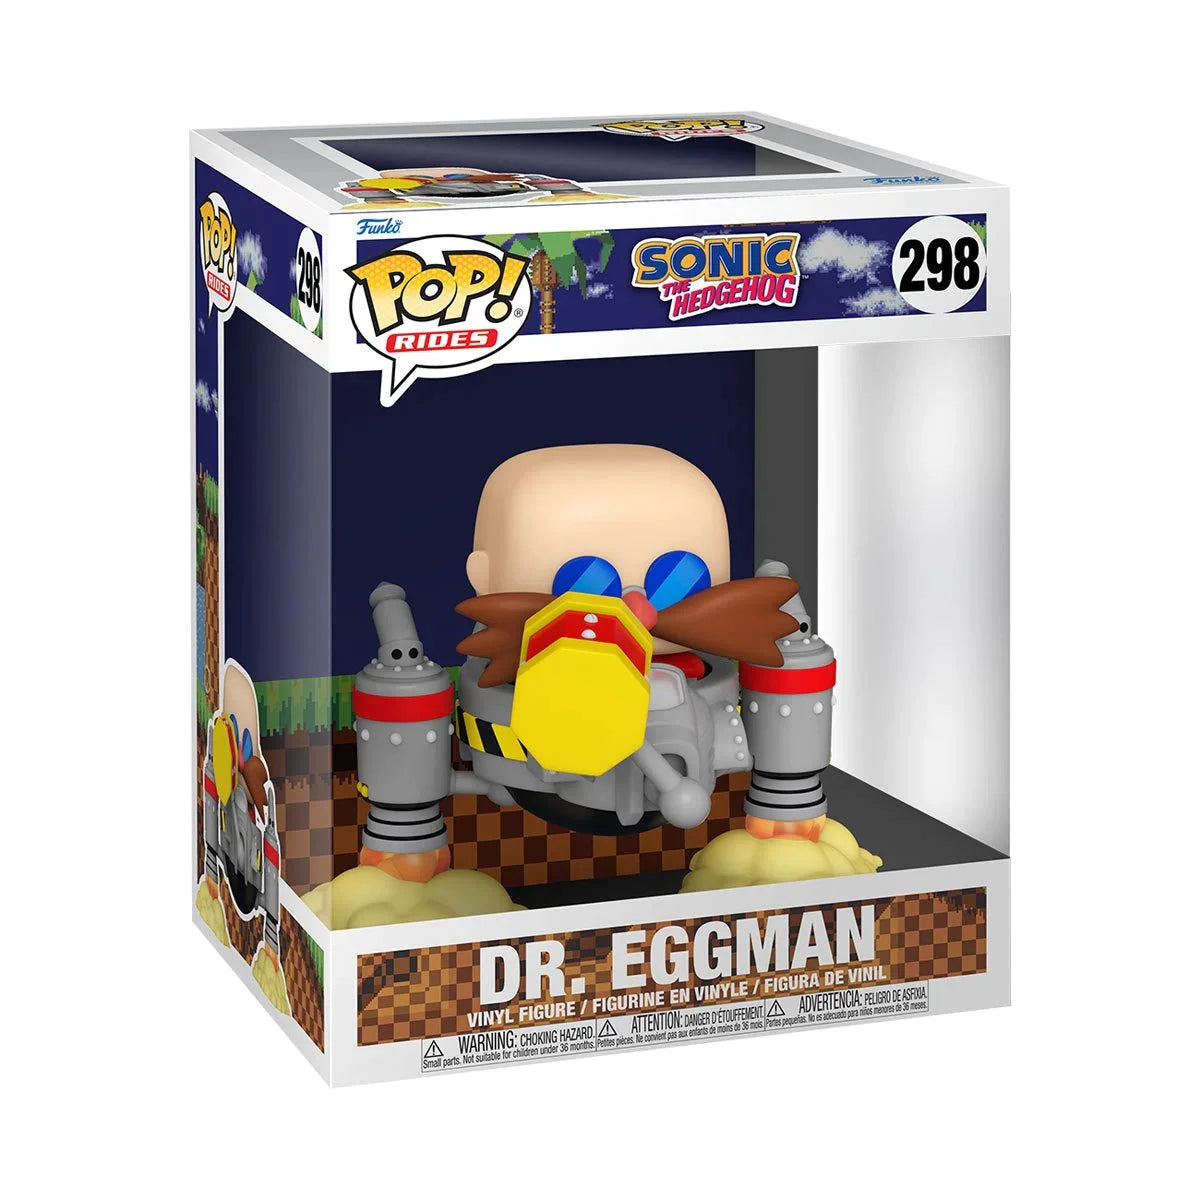 Funko Pop! Sonic the Hedgehog Dr. Eggman Vinyl Figure #298 - *PREORDER